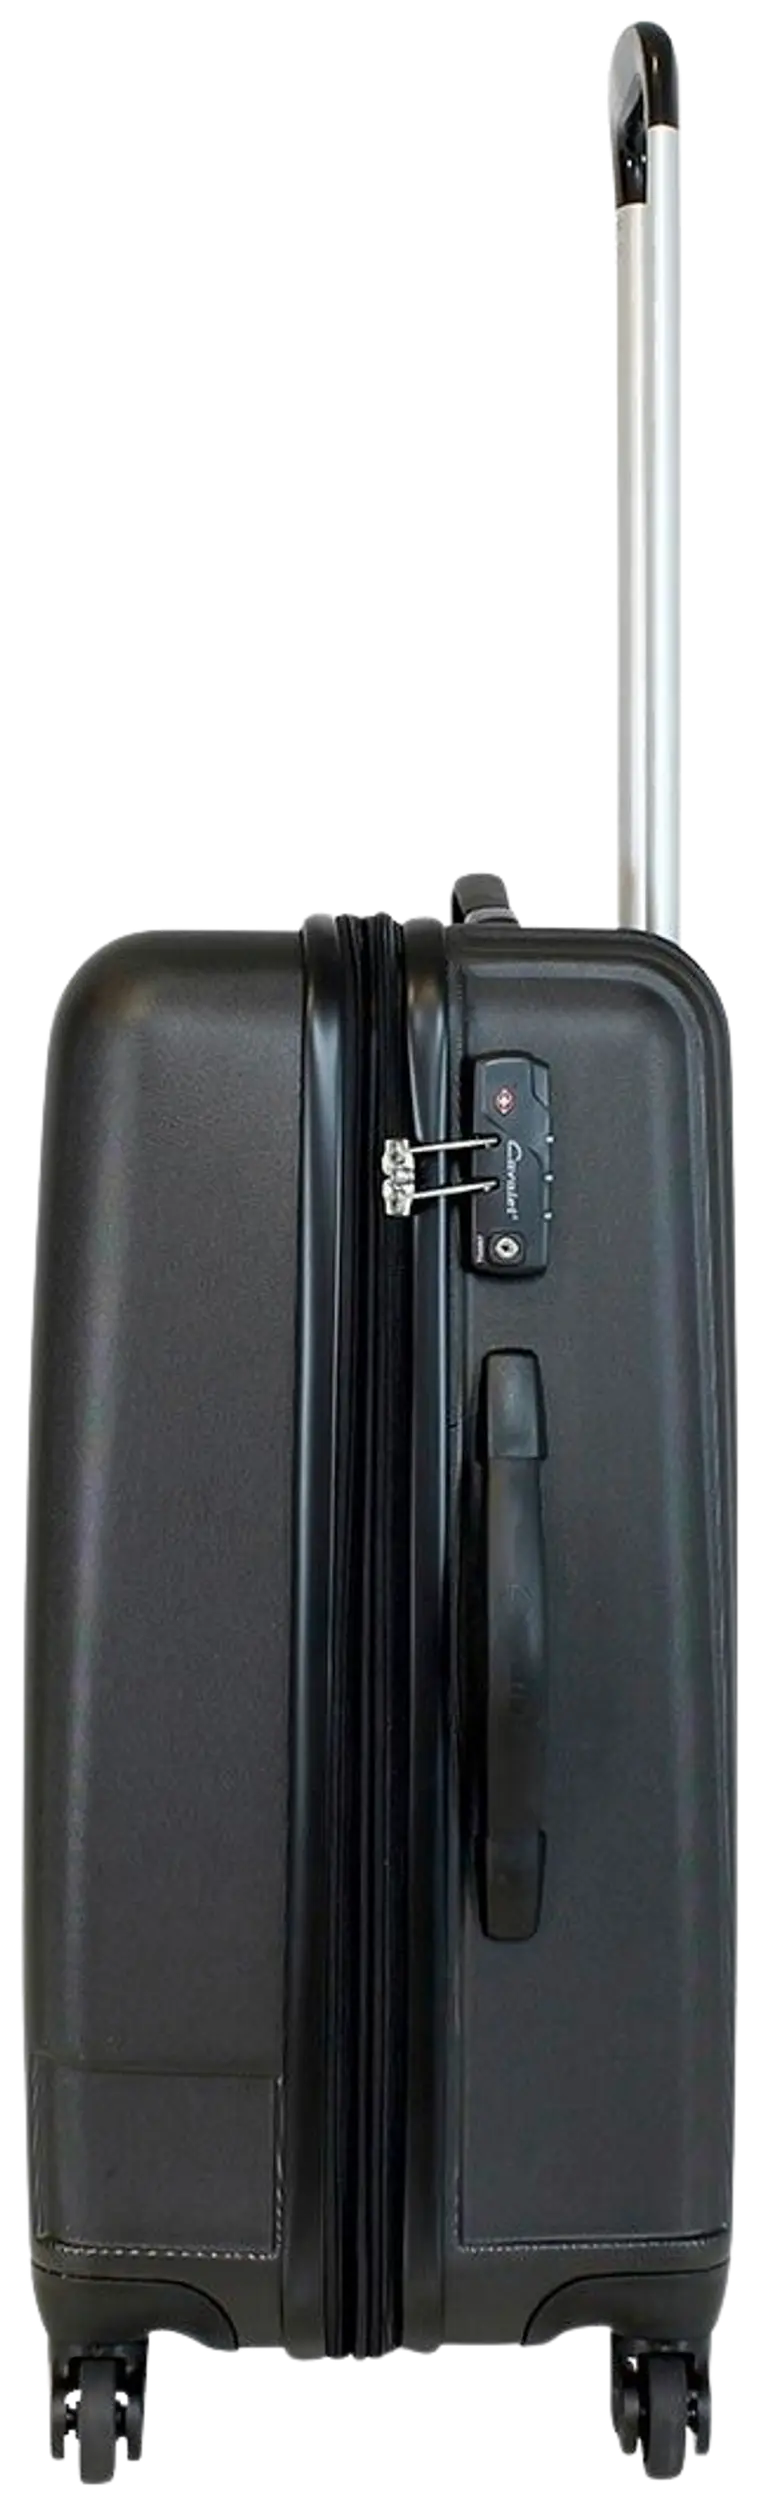 Cavalet Malibu matkalaukku L 73 cm, musta - 4